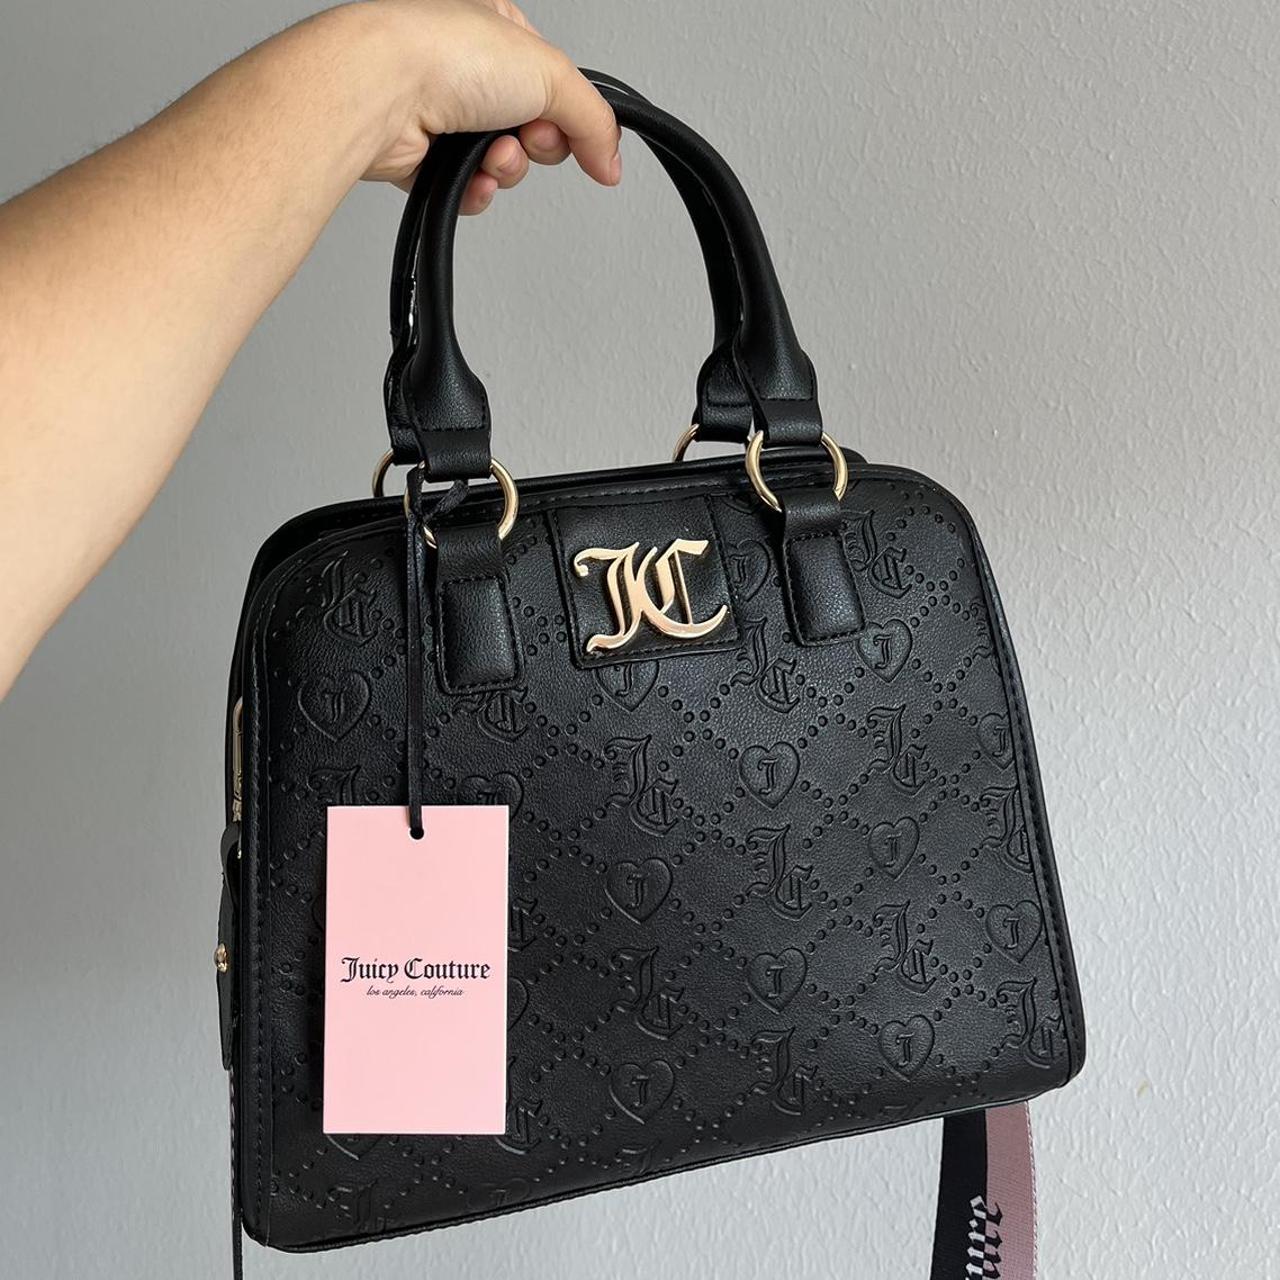 Juicy Couture Women's Bag - Black